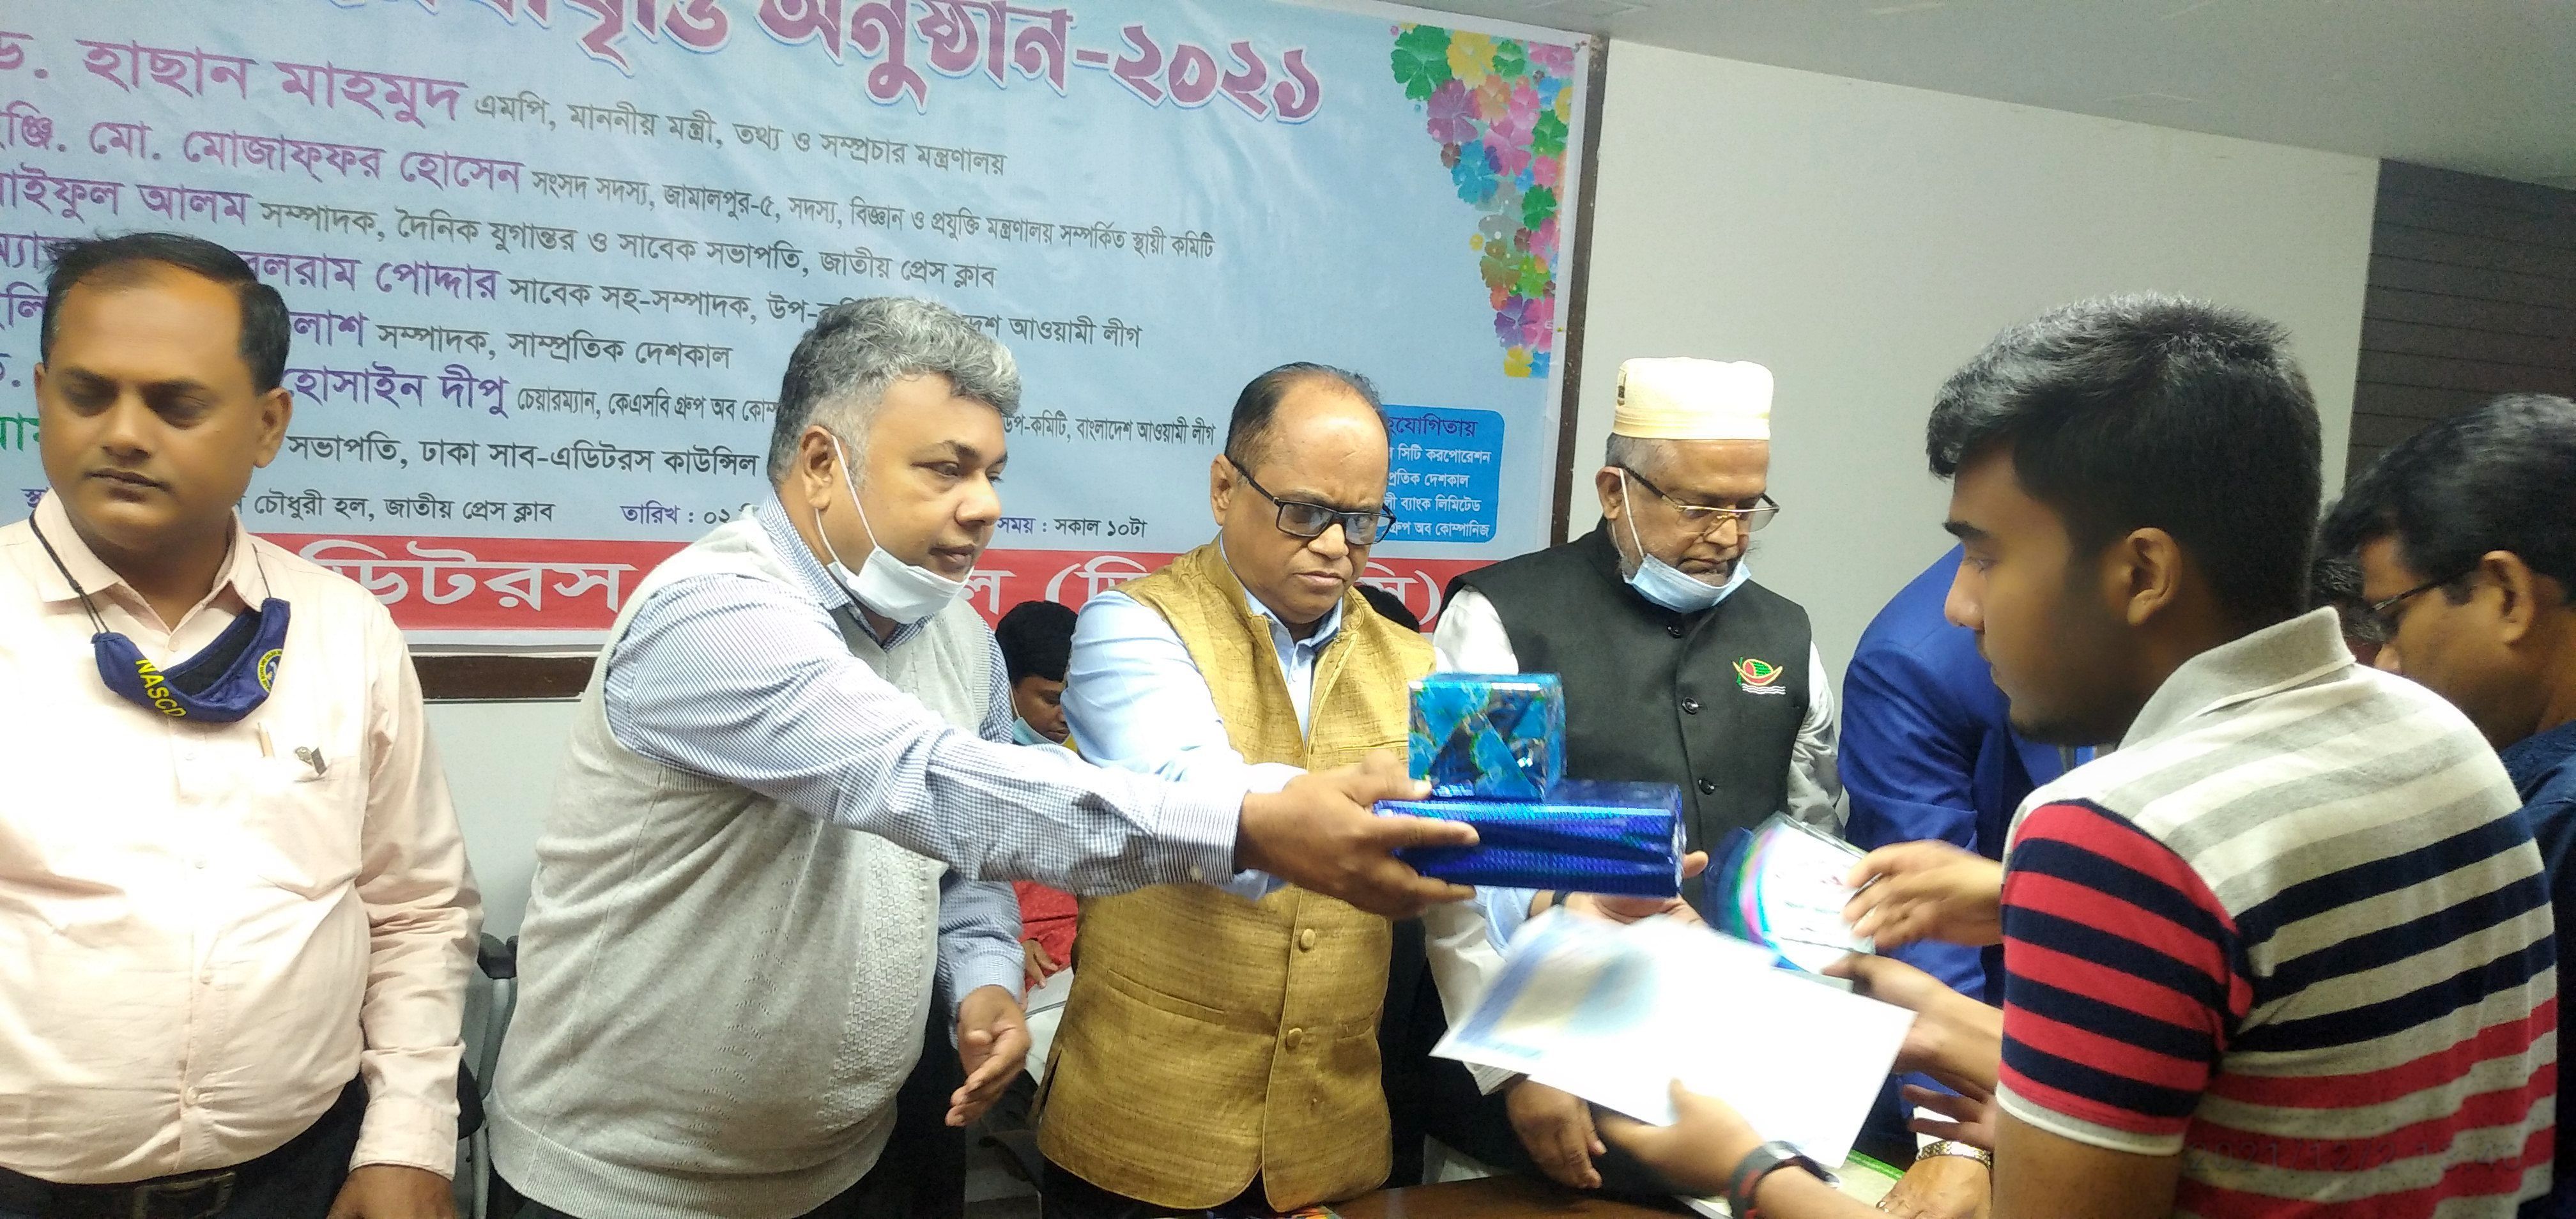 Eliash Uddin Palash, Editor of Shampratik Deshkal newspaper, is handing over the gift.